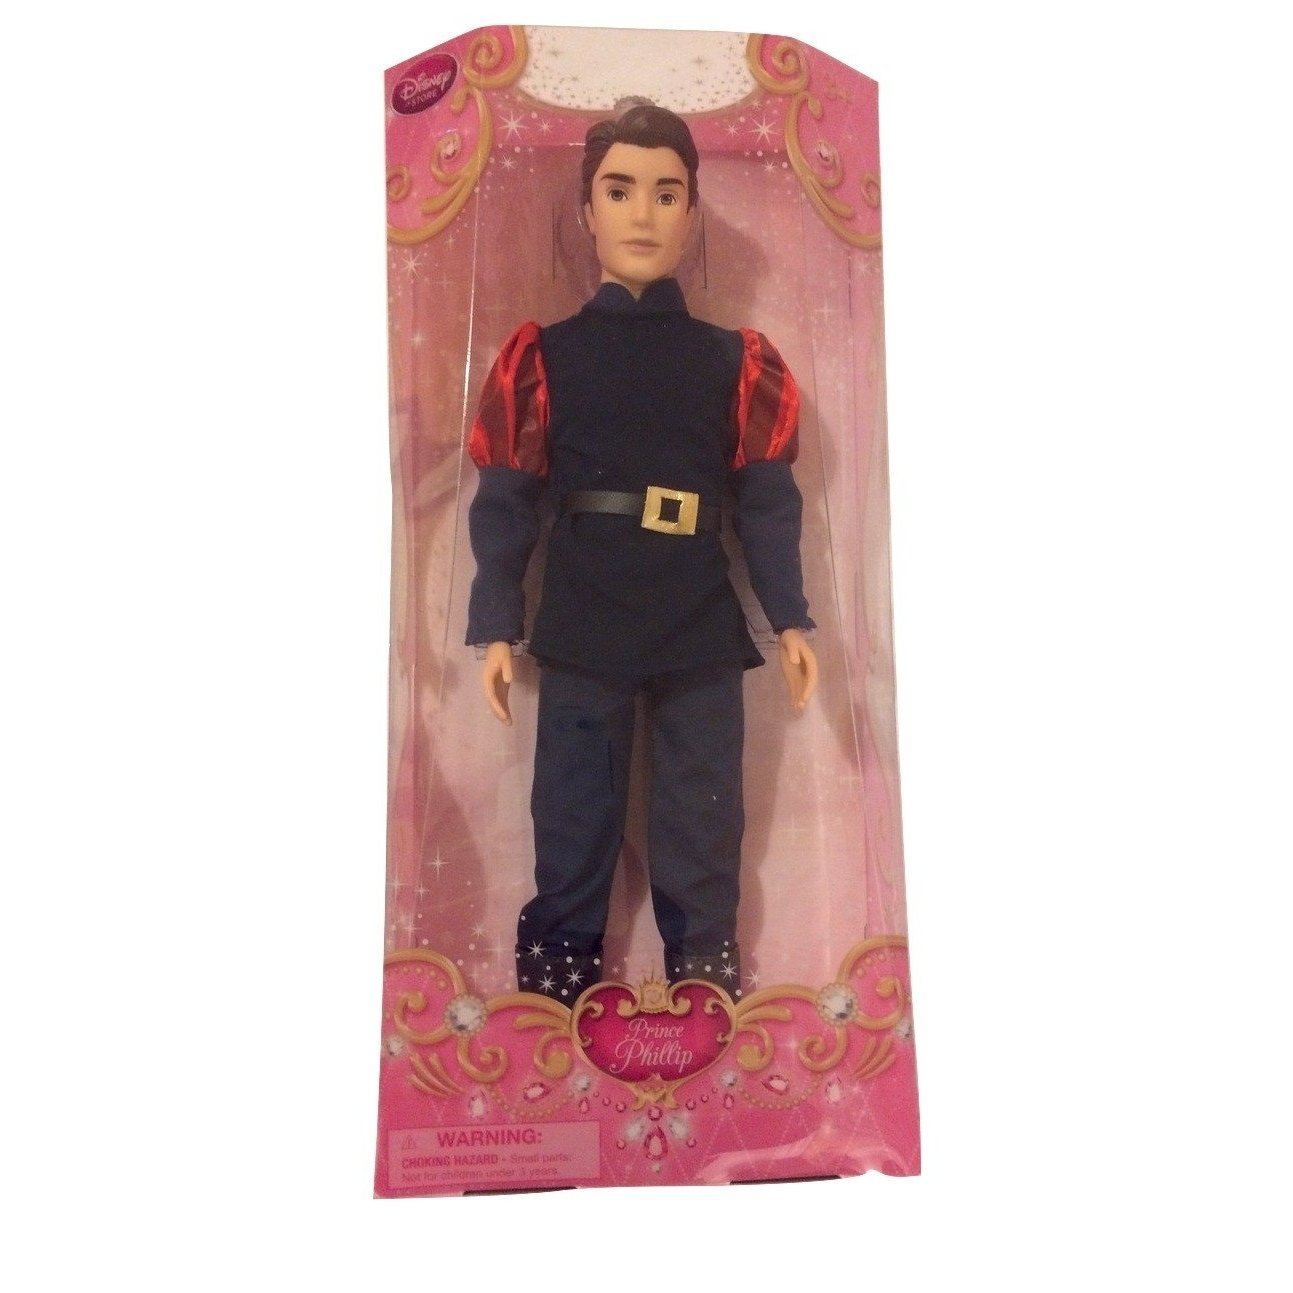 prince philip disney doll